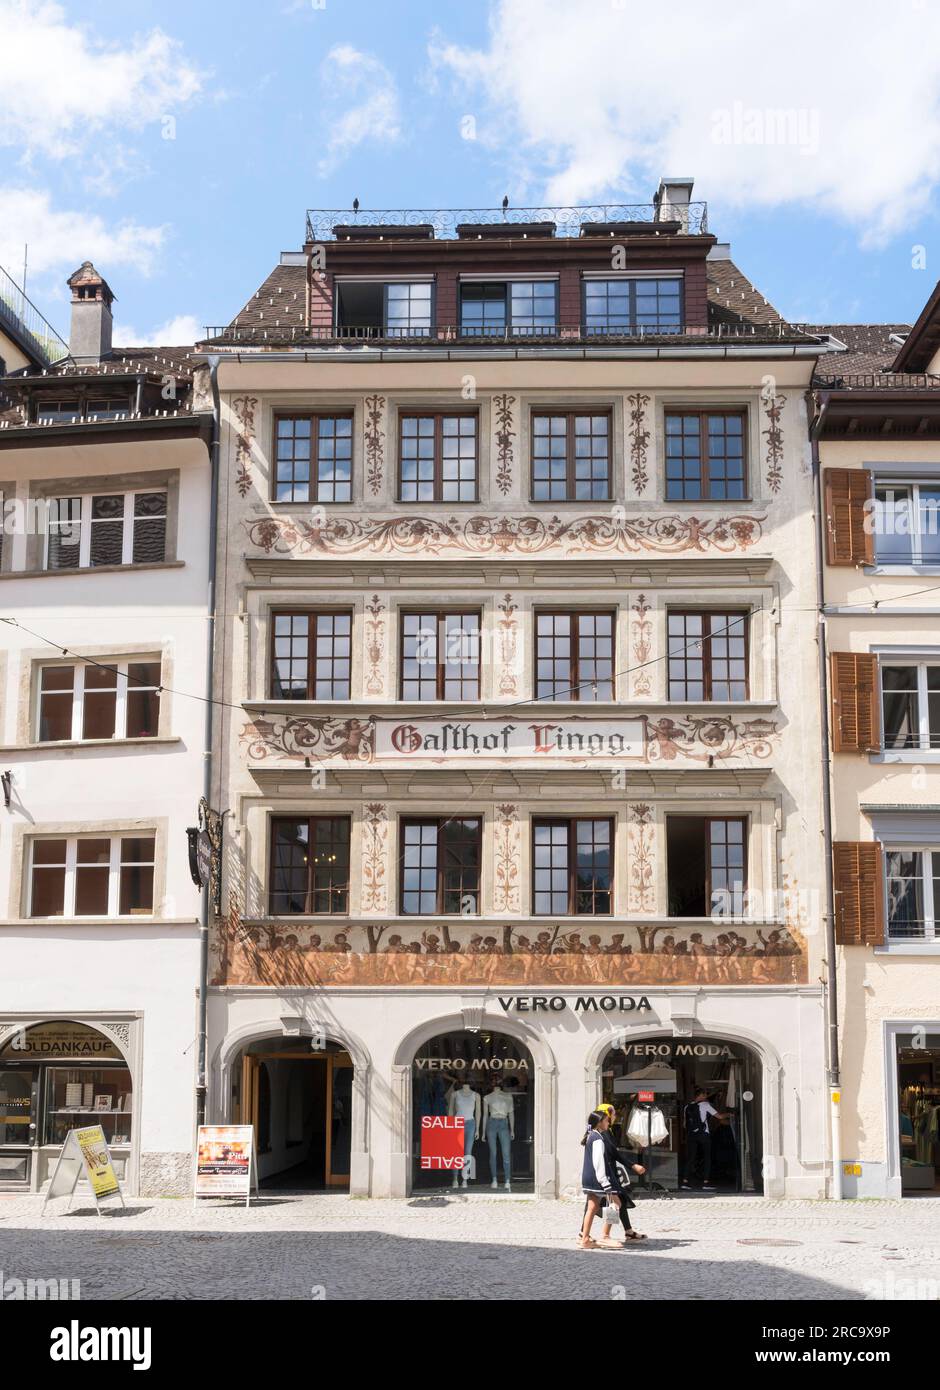 Vero Moda shop and Gasthof Lingg restaurant in Feldkirch, Austria, Europe Stock Photo